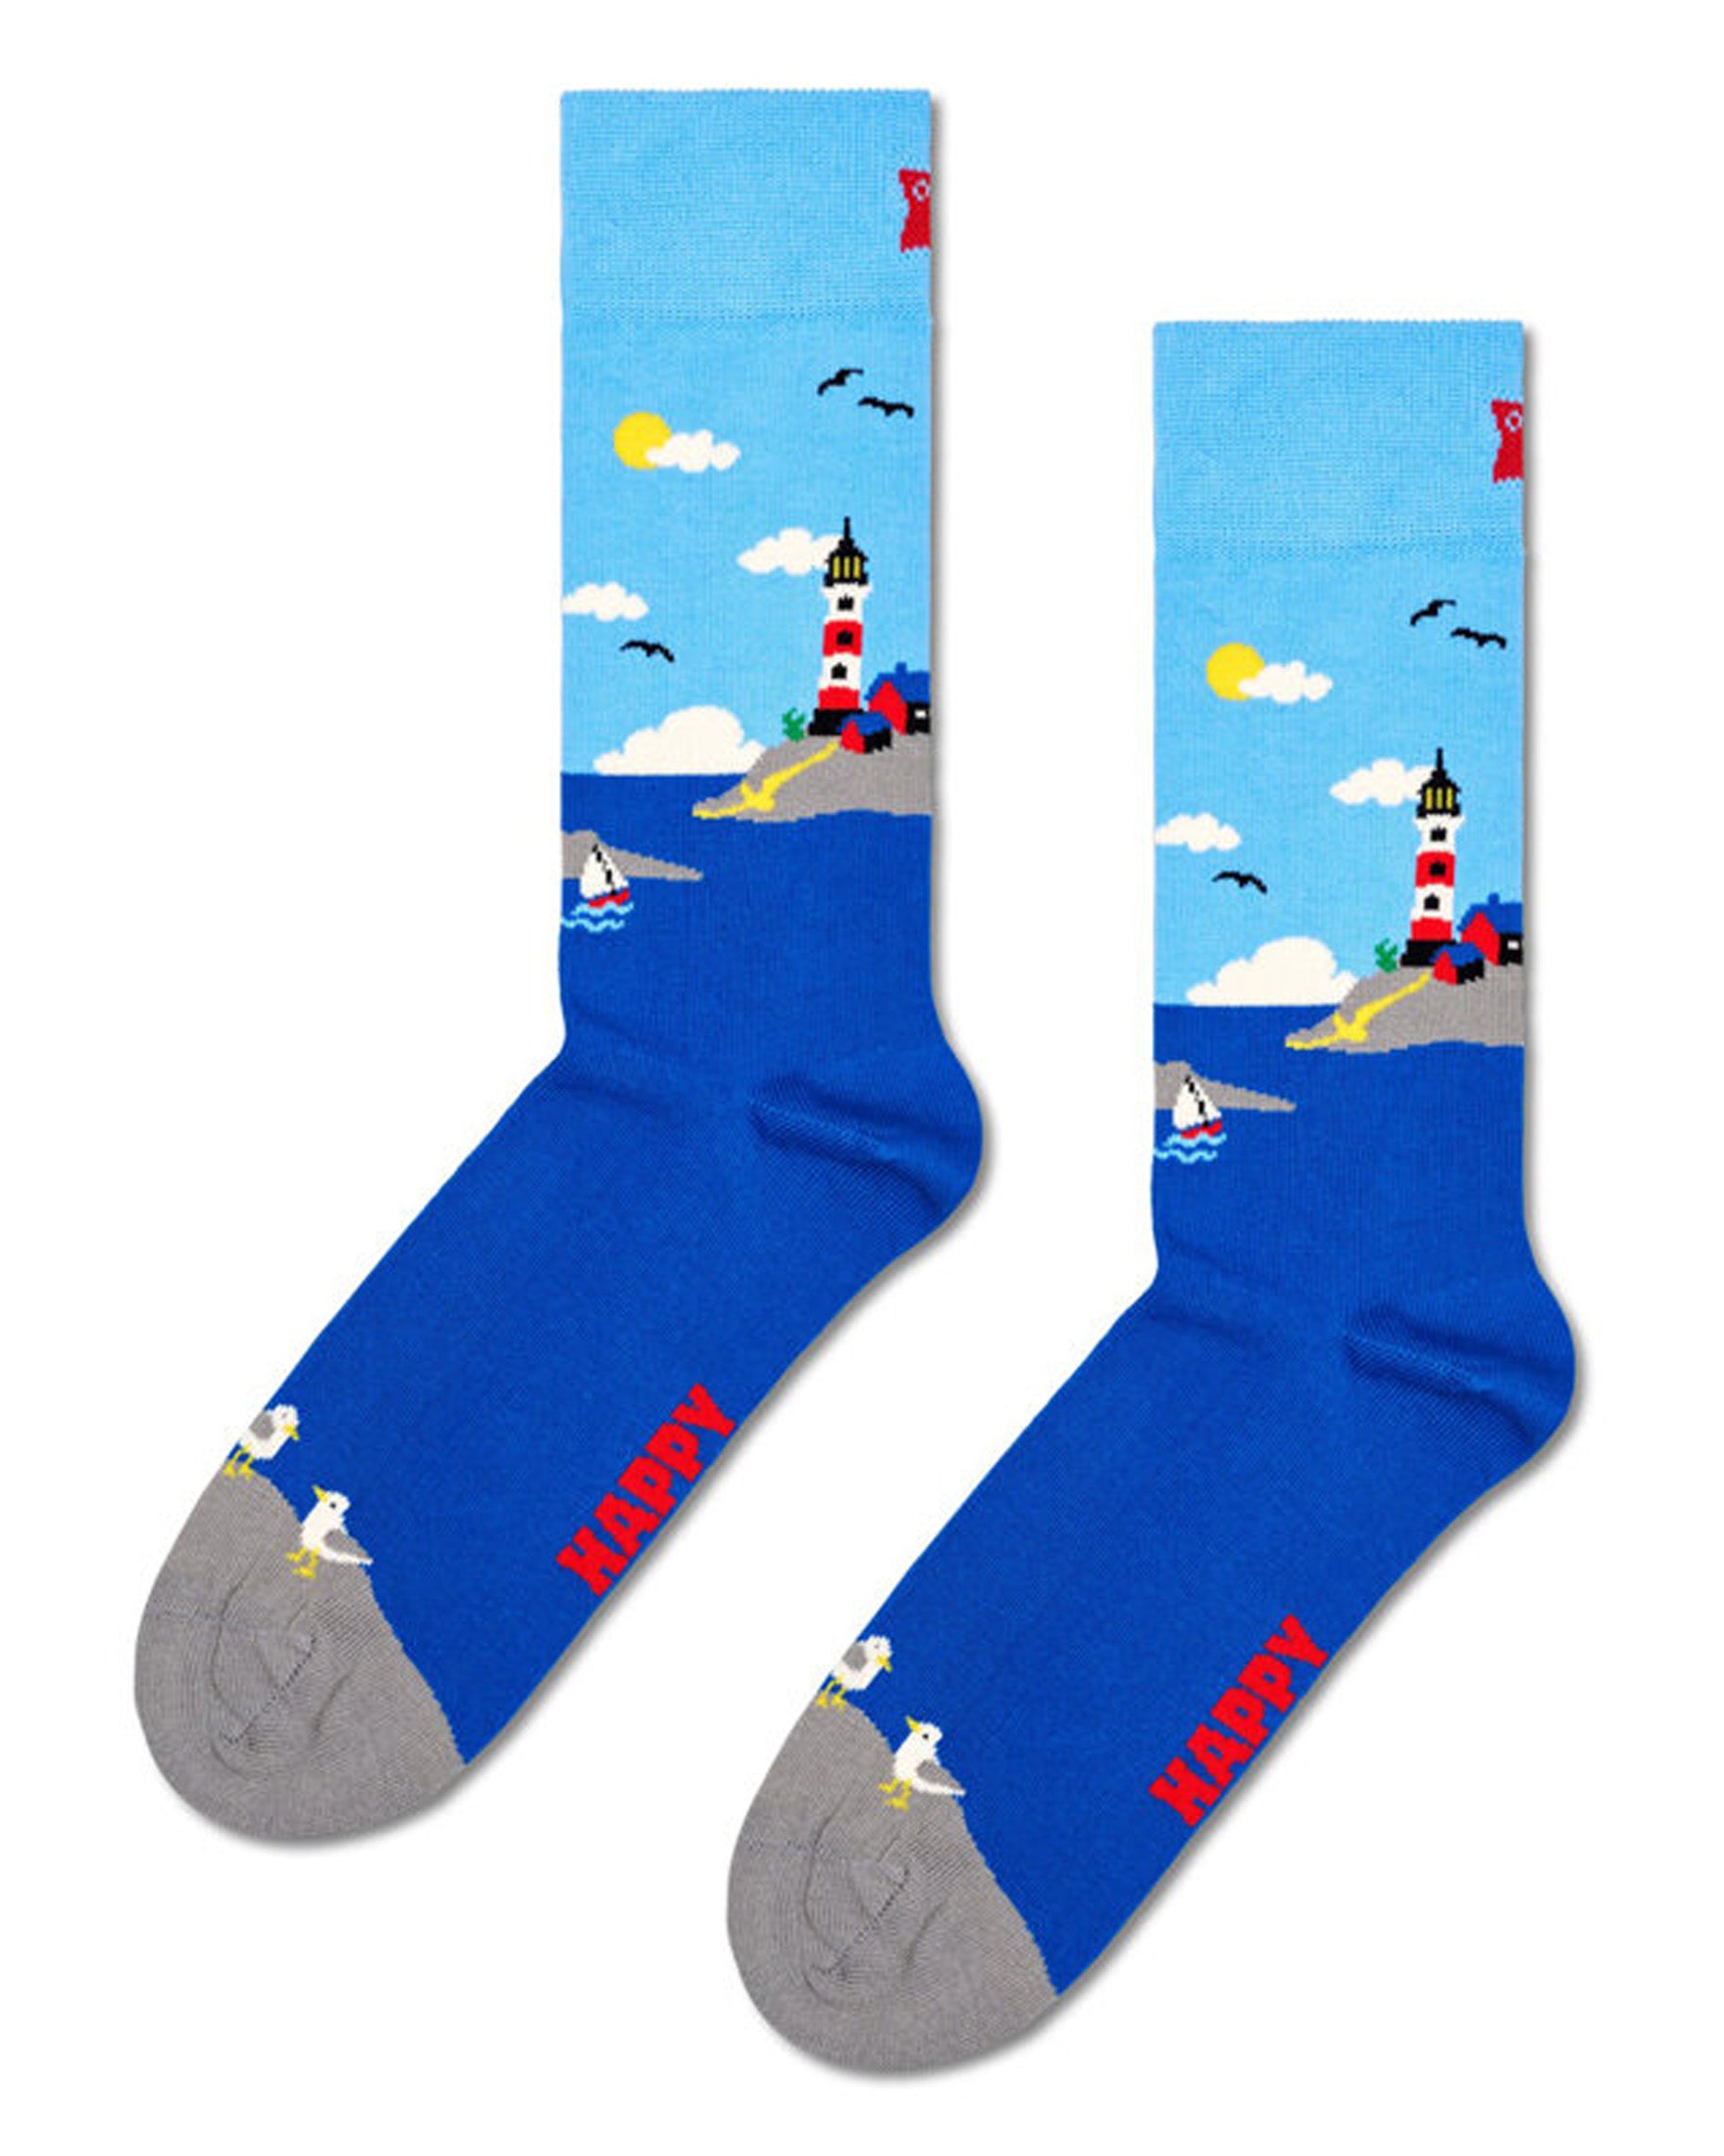 Happy Socks P001159 Light House Sock - Light sky blue cotton crew length ankle socks with a rugid rocky coastal scene design featuring a lighthouse, sail boat, clouds, sun and birds.